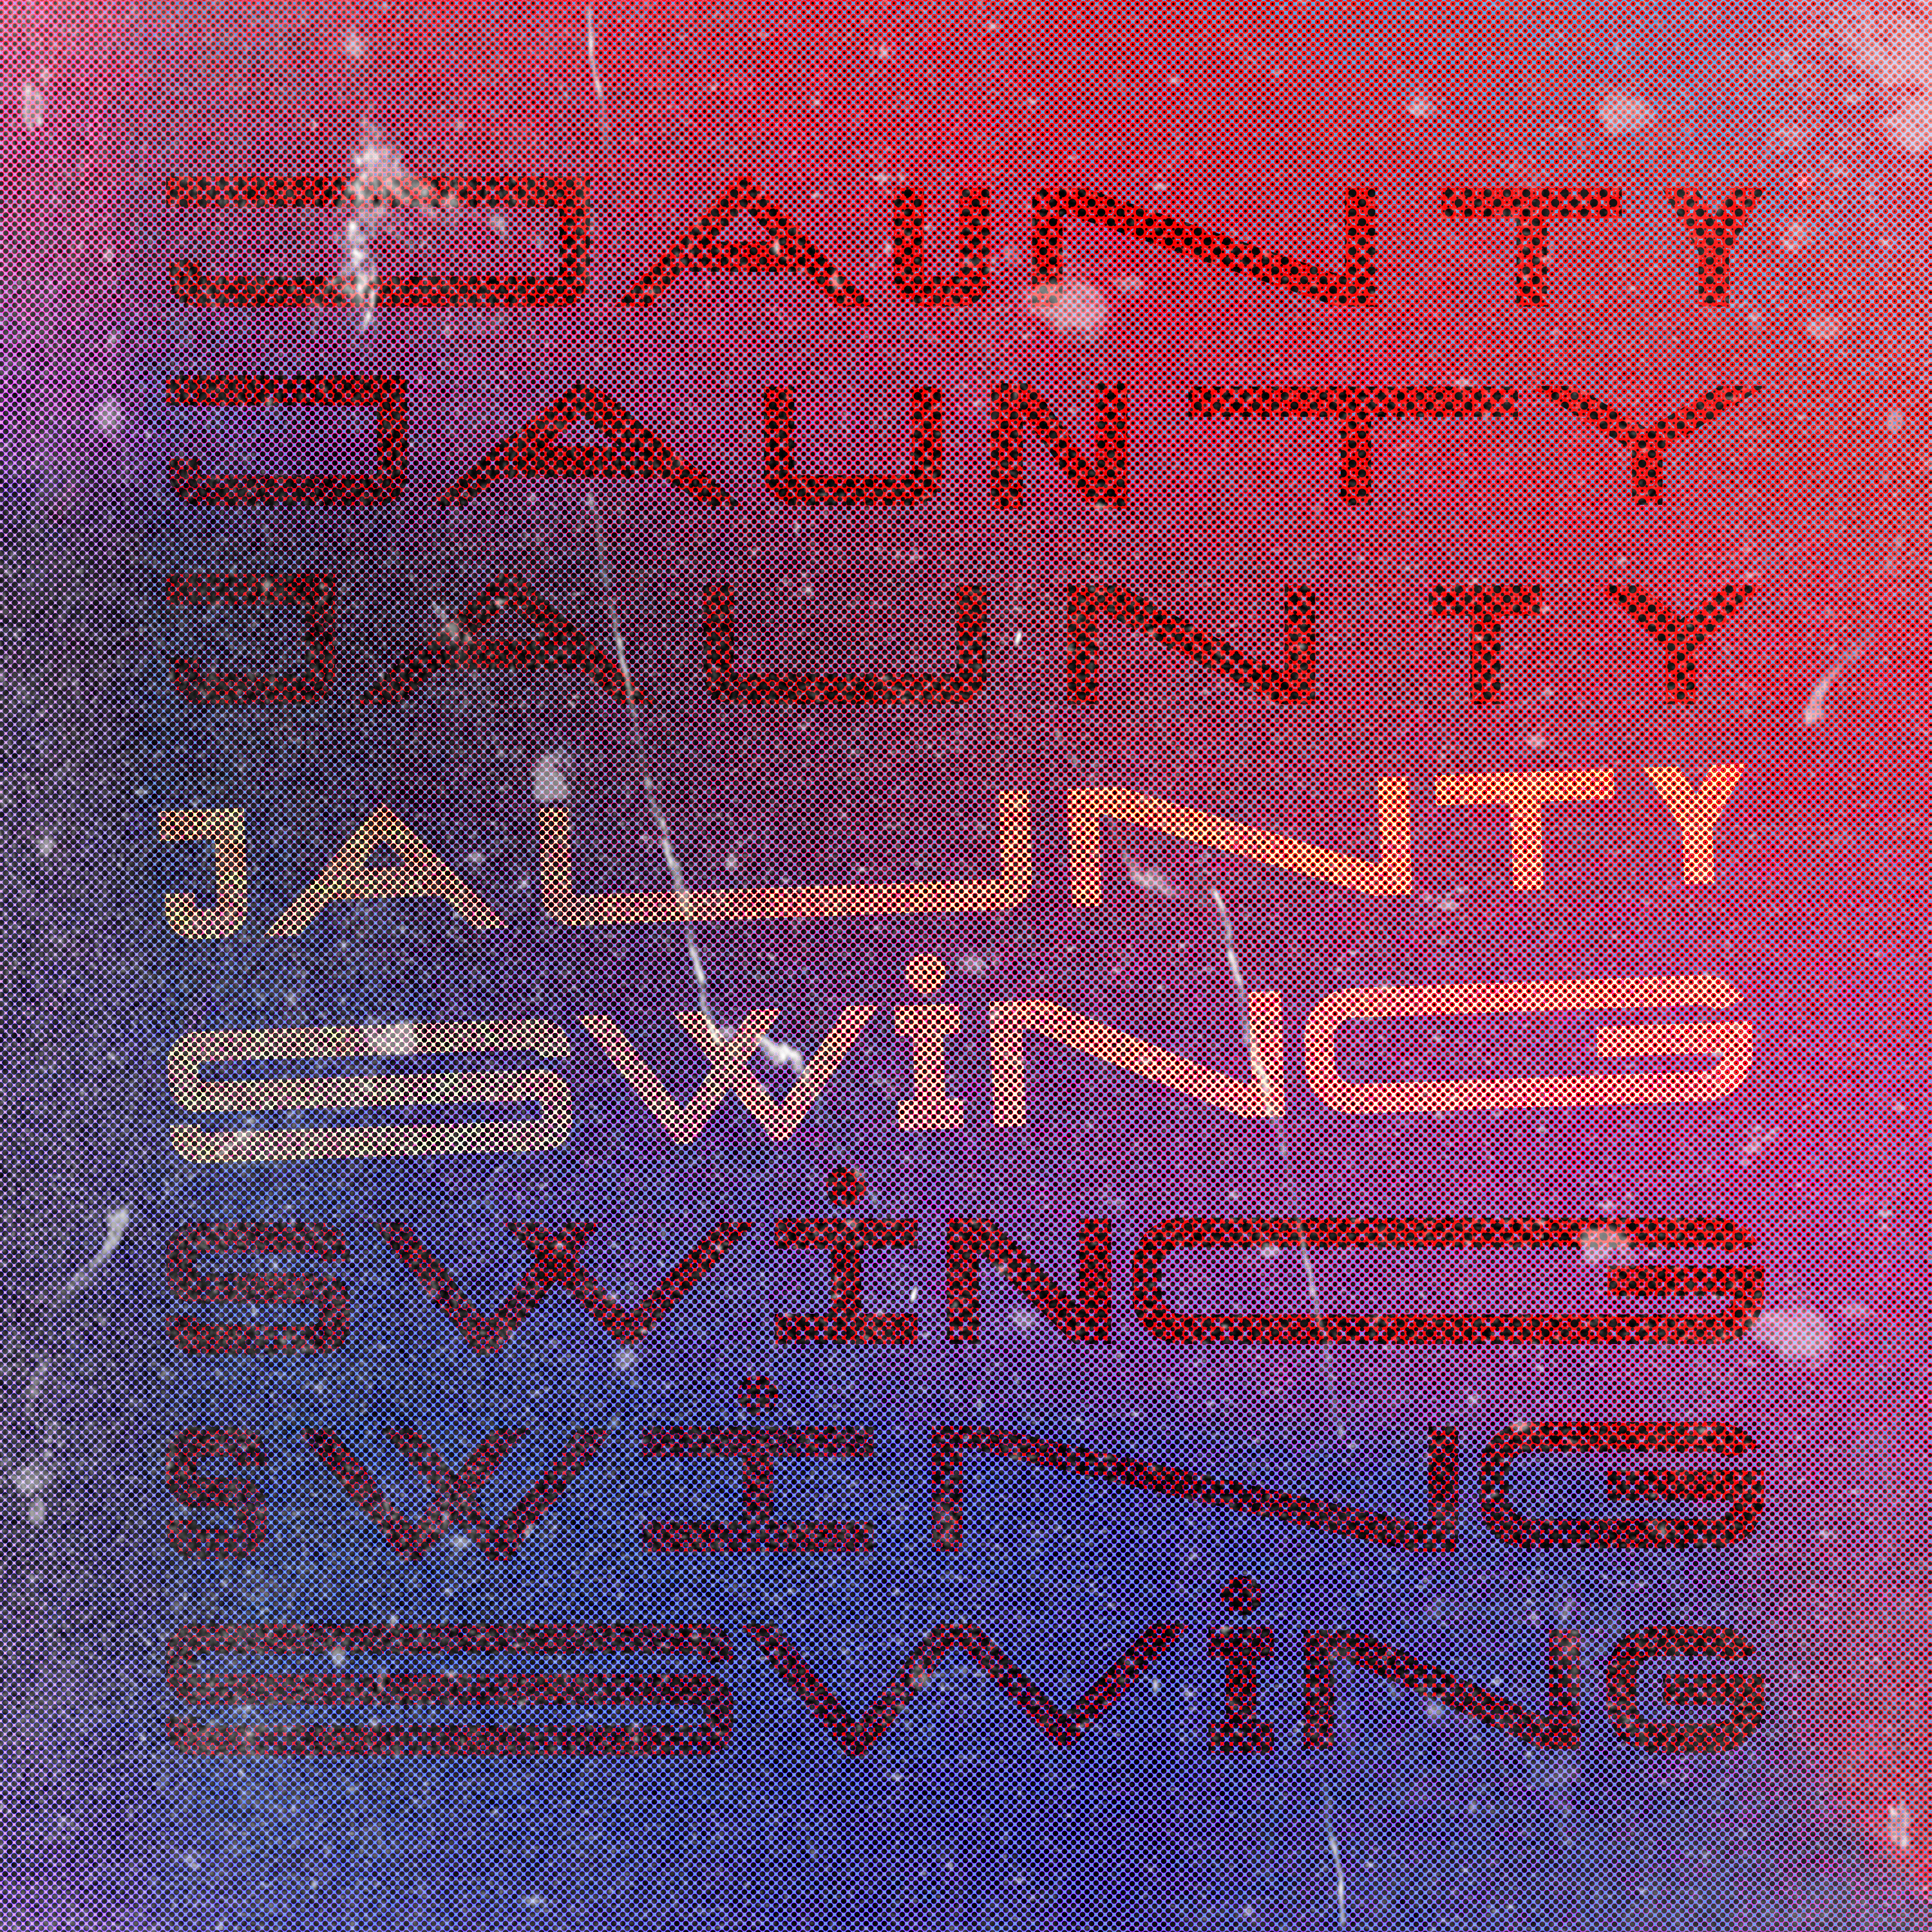 Jaunty Swing album artwork